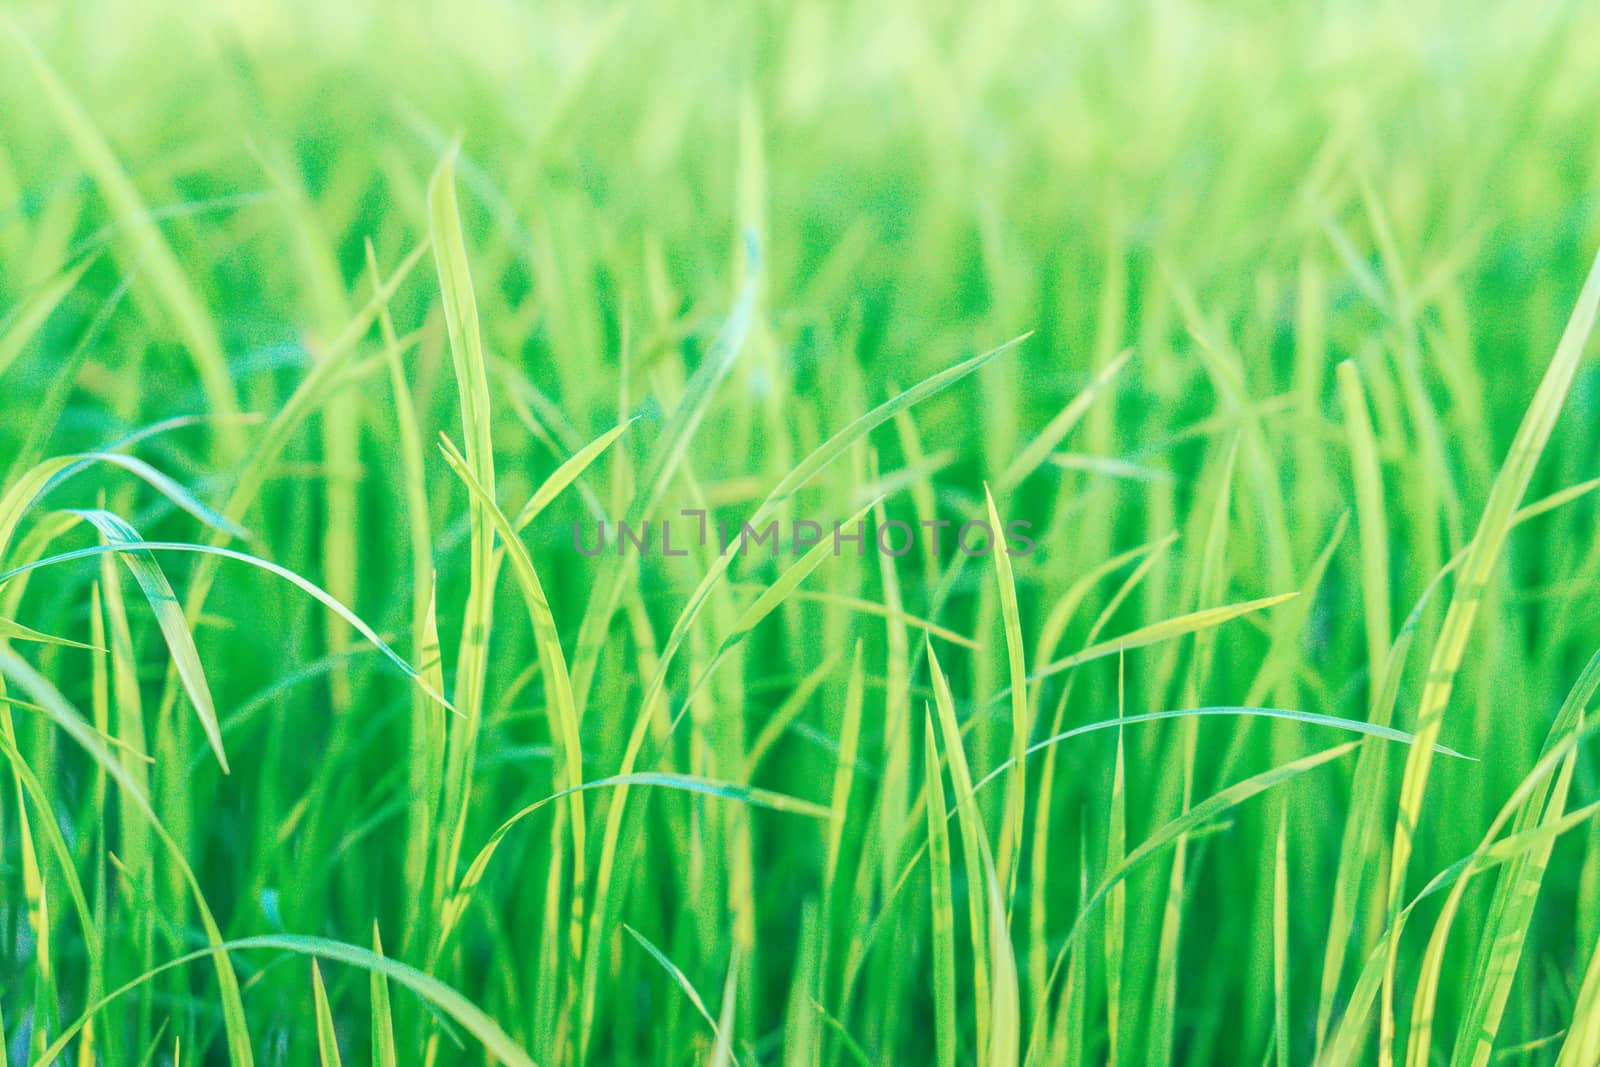 Green rice field in rain season by pt.pongsak@gmail.com